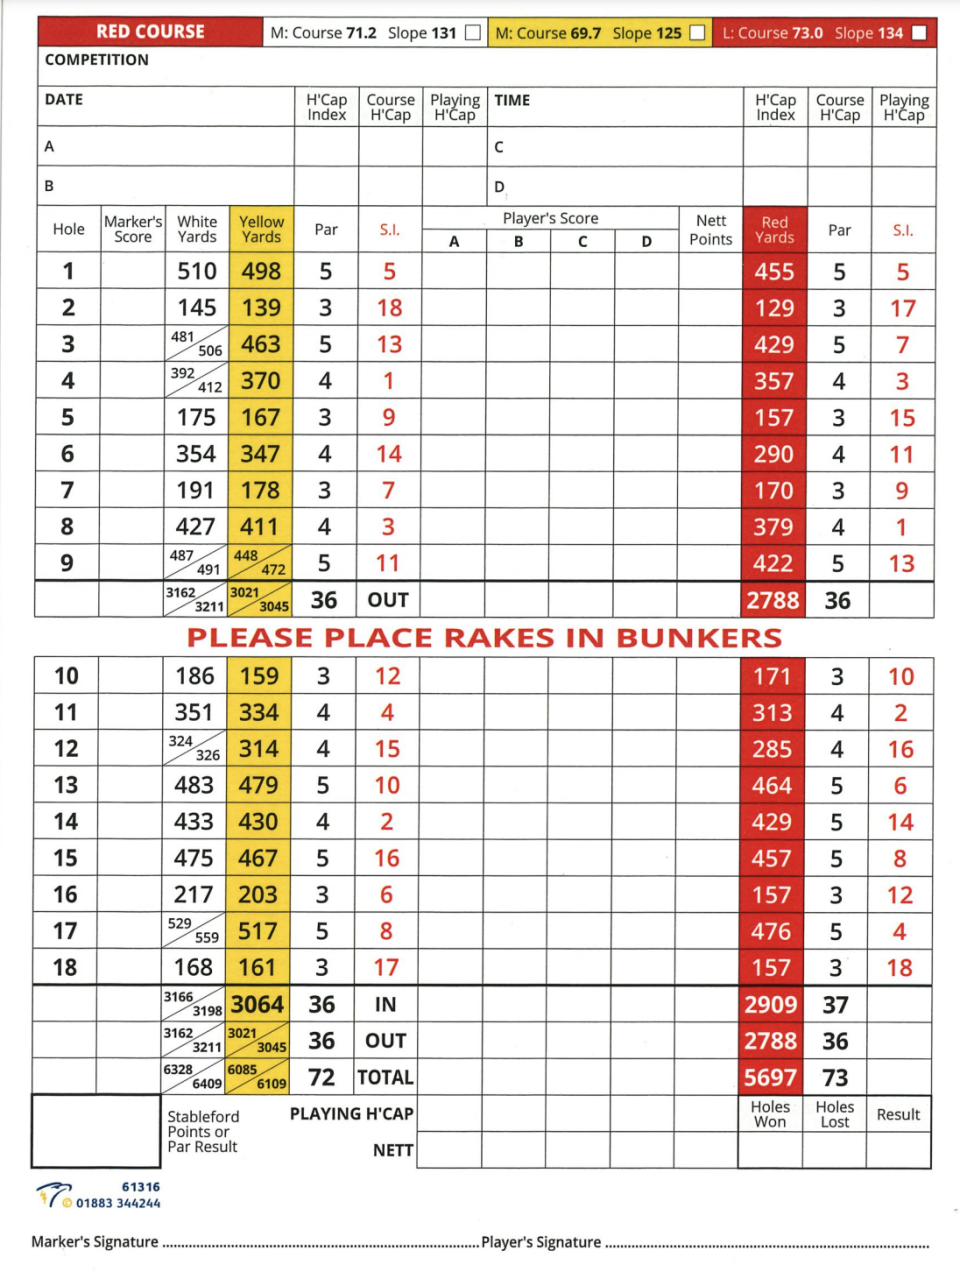 The Berkshire Red Course scorecard